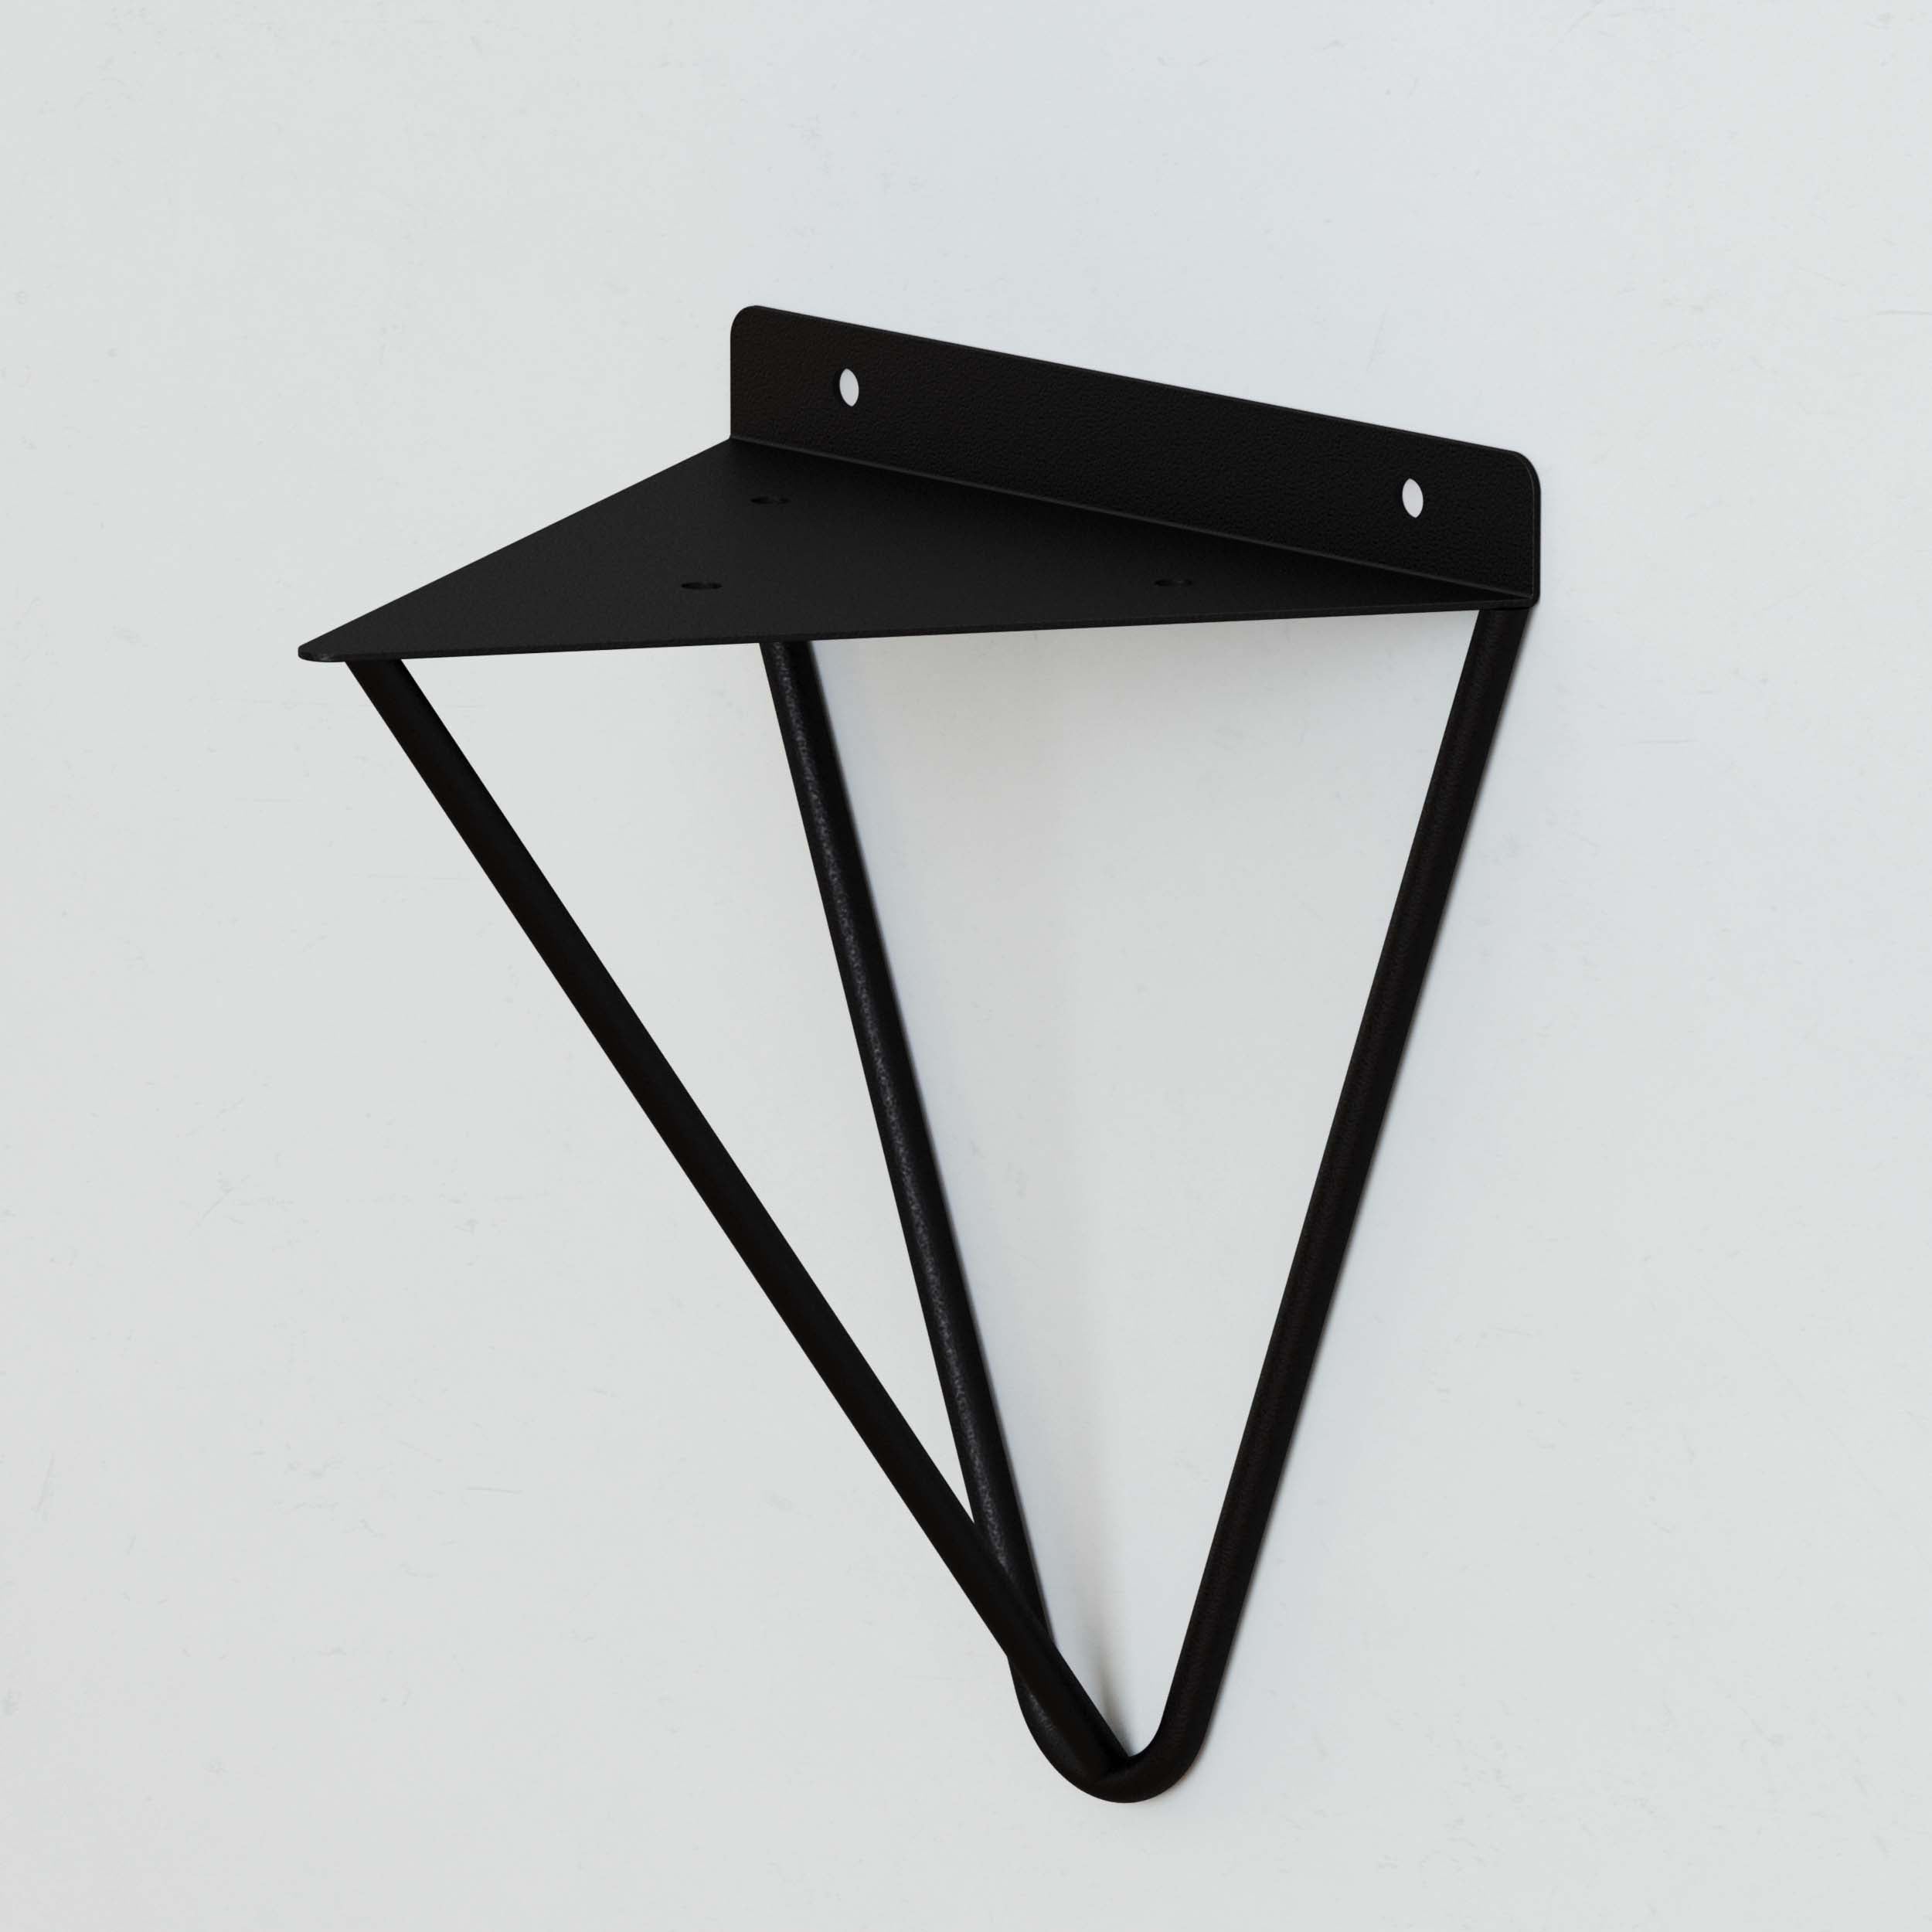 A single black triangular shelf bracket mounted on a wall.